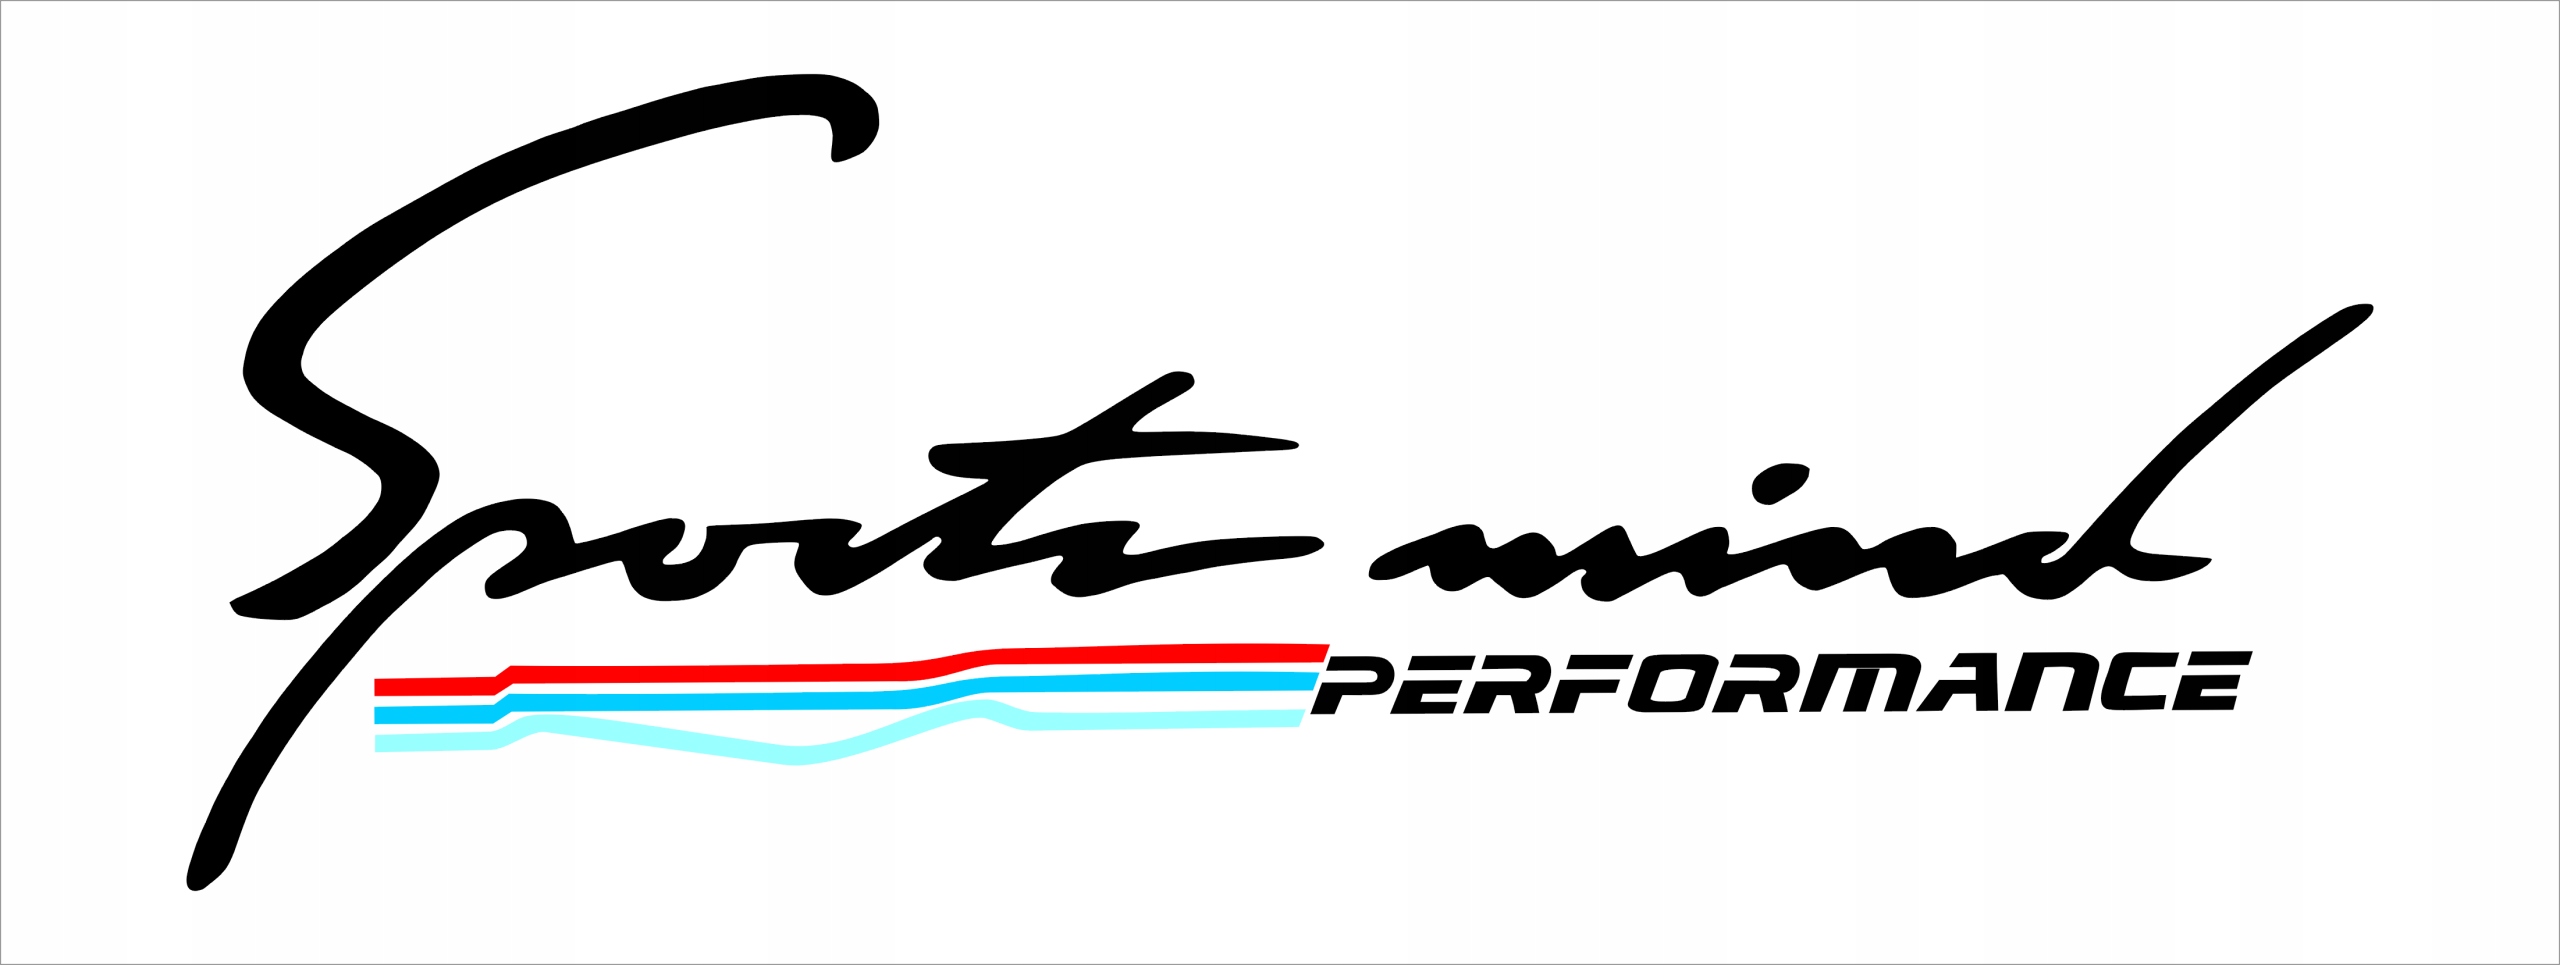 Performance now. БМВ со спортивными наклейками. M Performance наклейка. Наклейка Nurburgring Performance BMW. Sports Mind Performance наклейка.